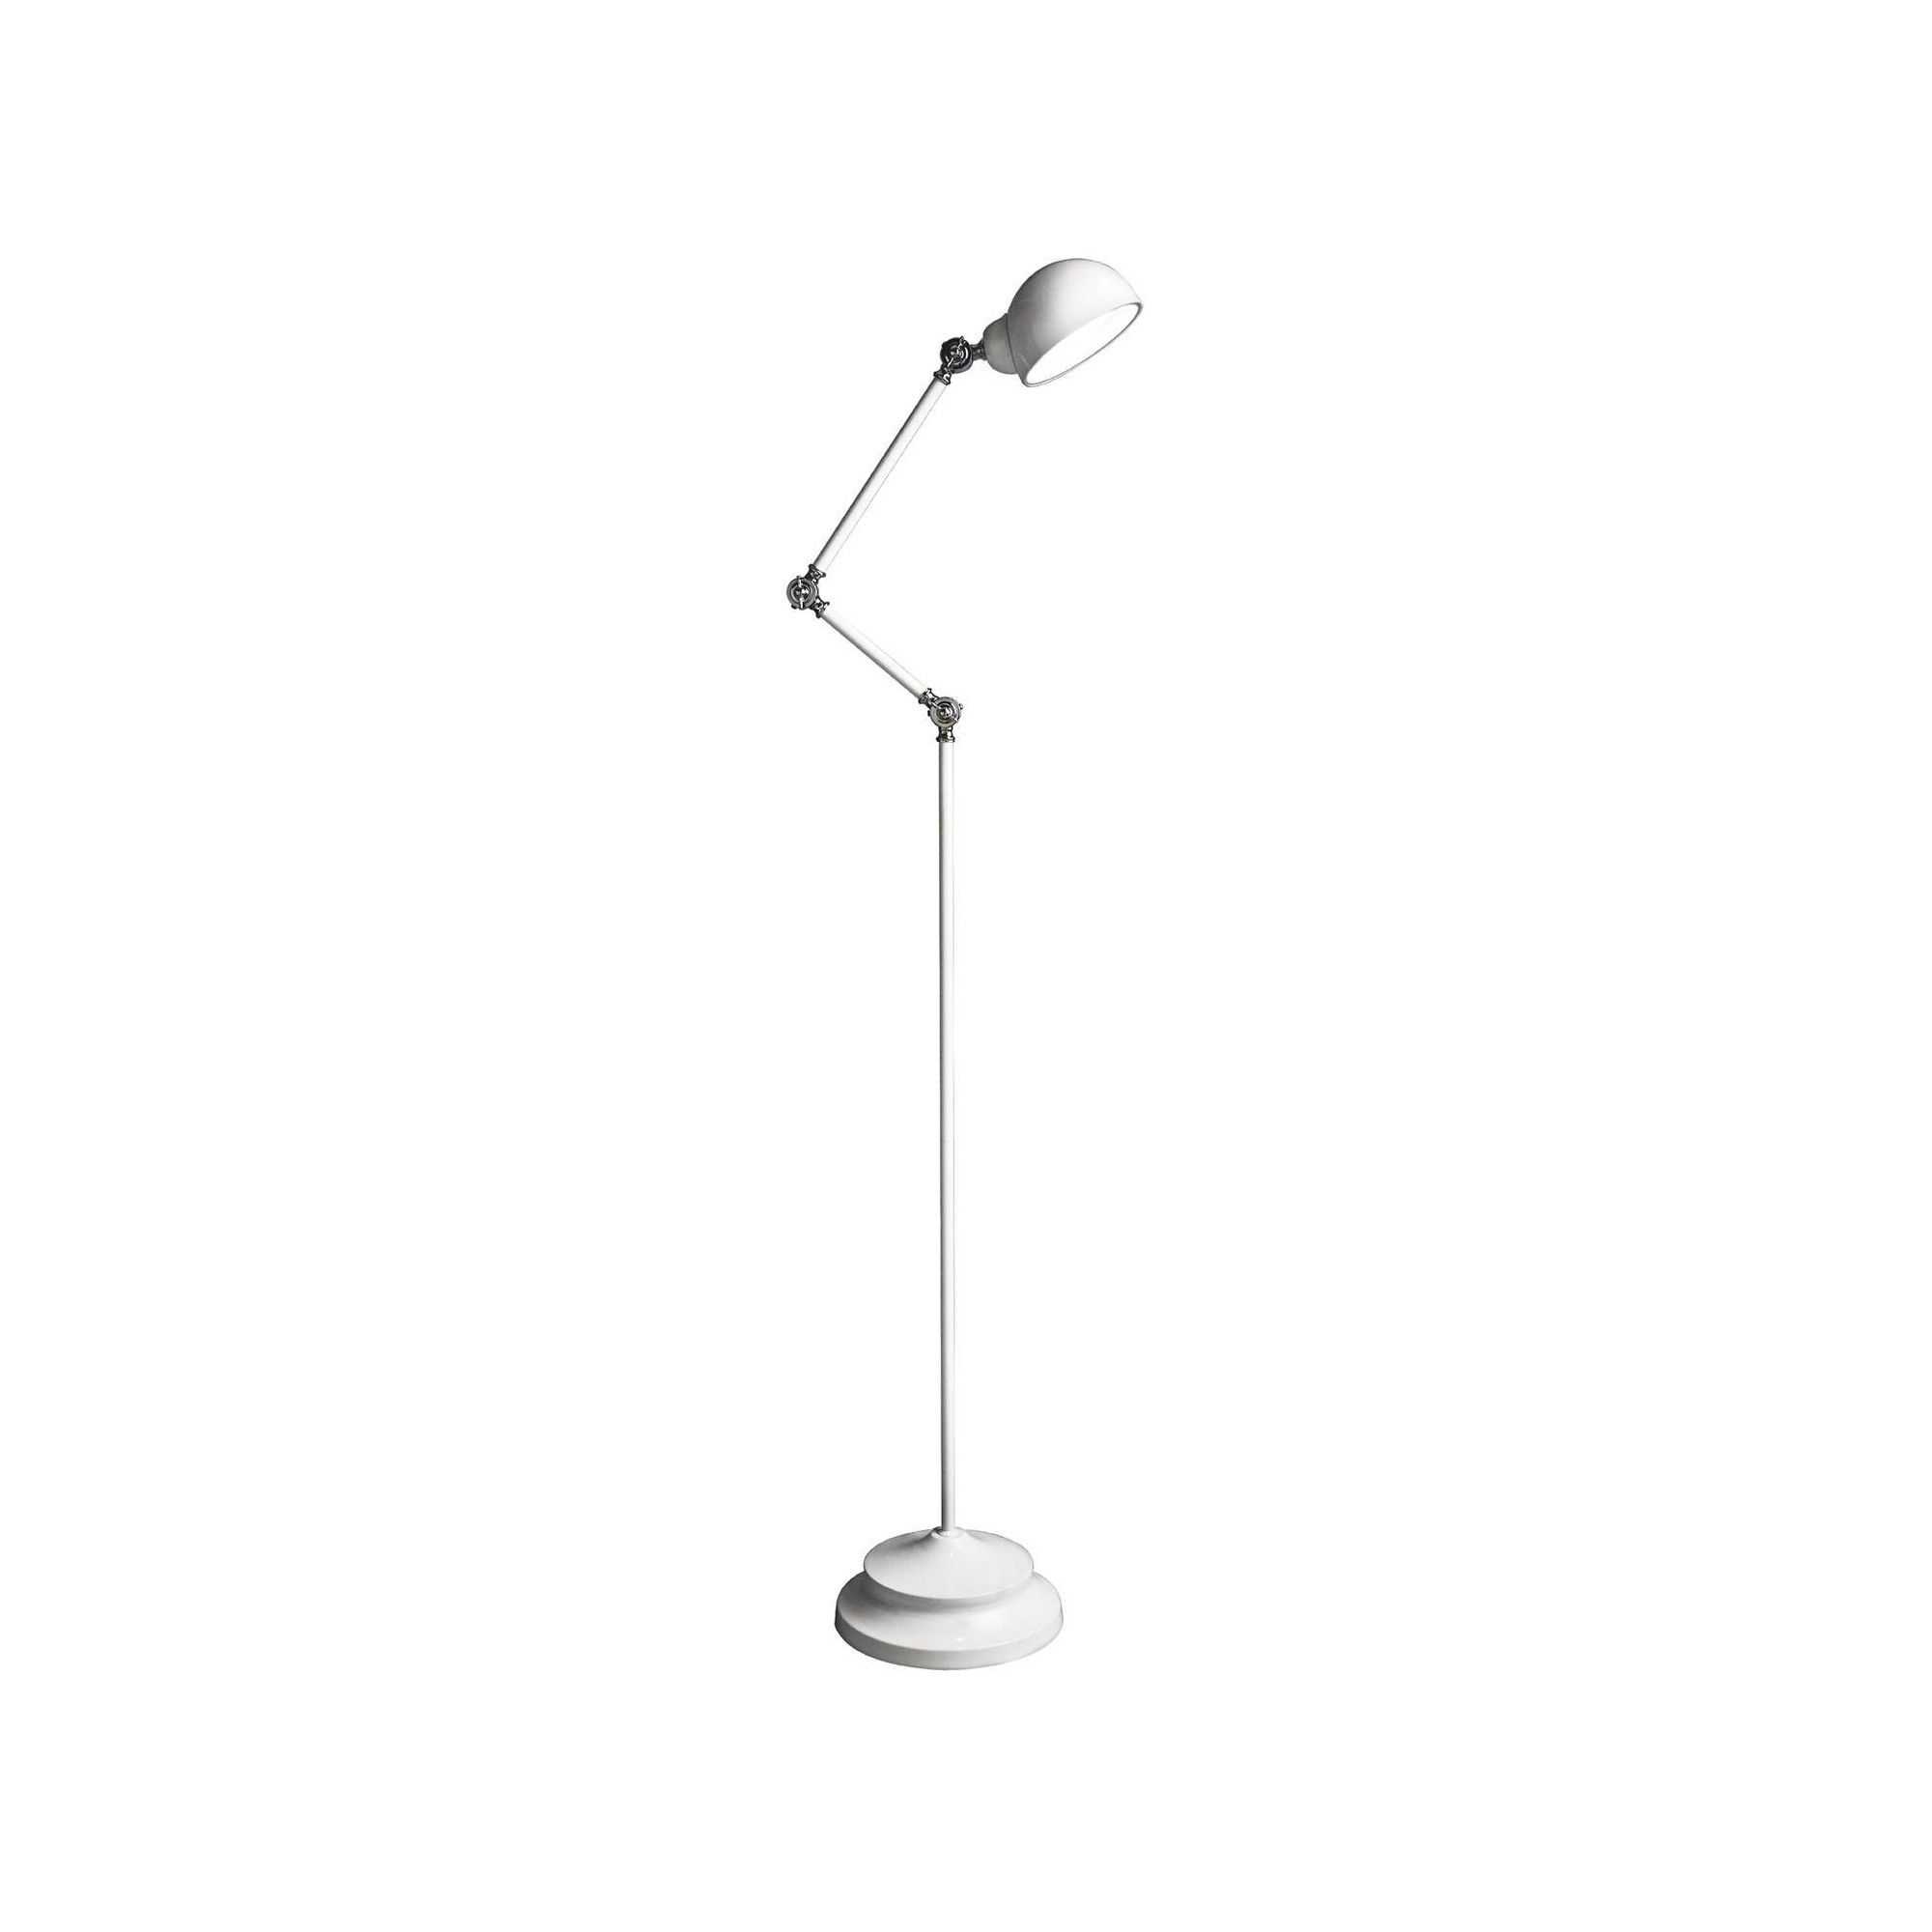 Ottlite Led Revive Floor Lamp White In 2019 White Floor throughout dimensions 2000 X 2000